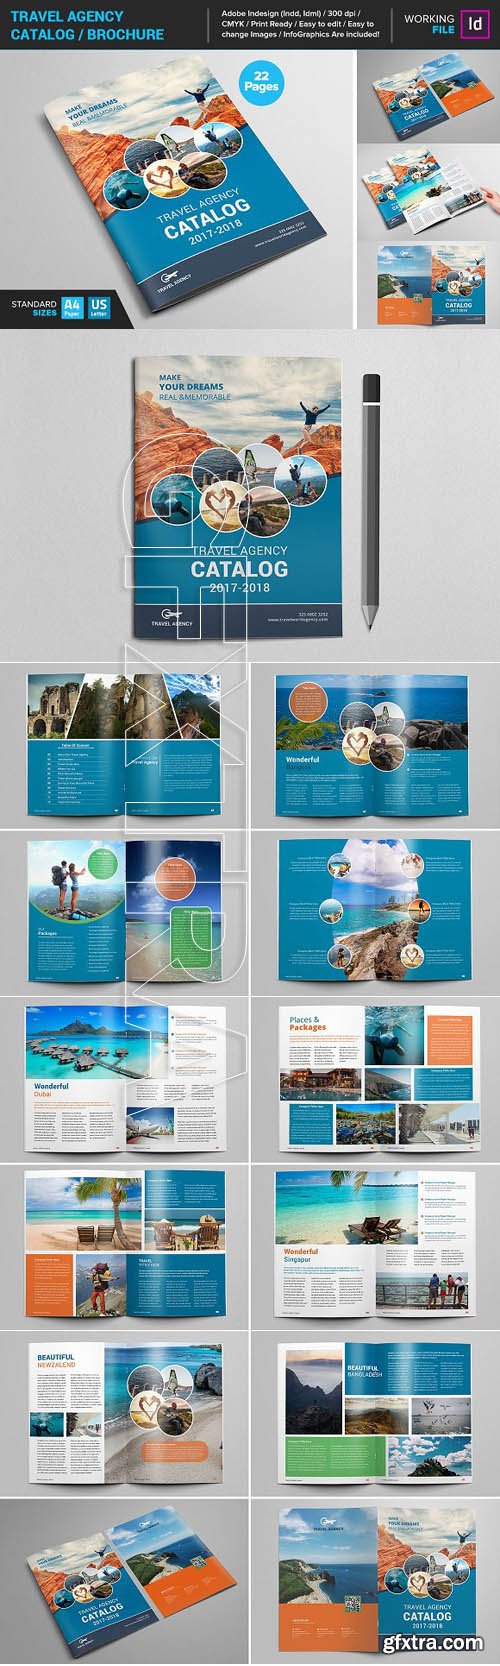 CM Travel Agency Catalog Brochure 1117726